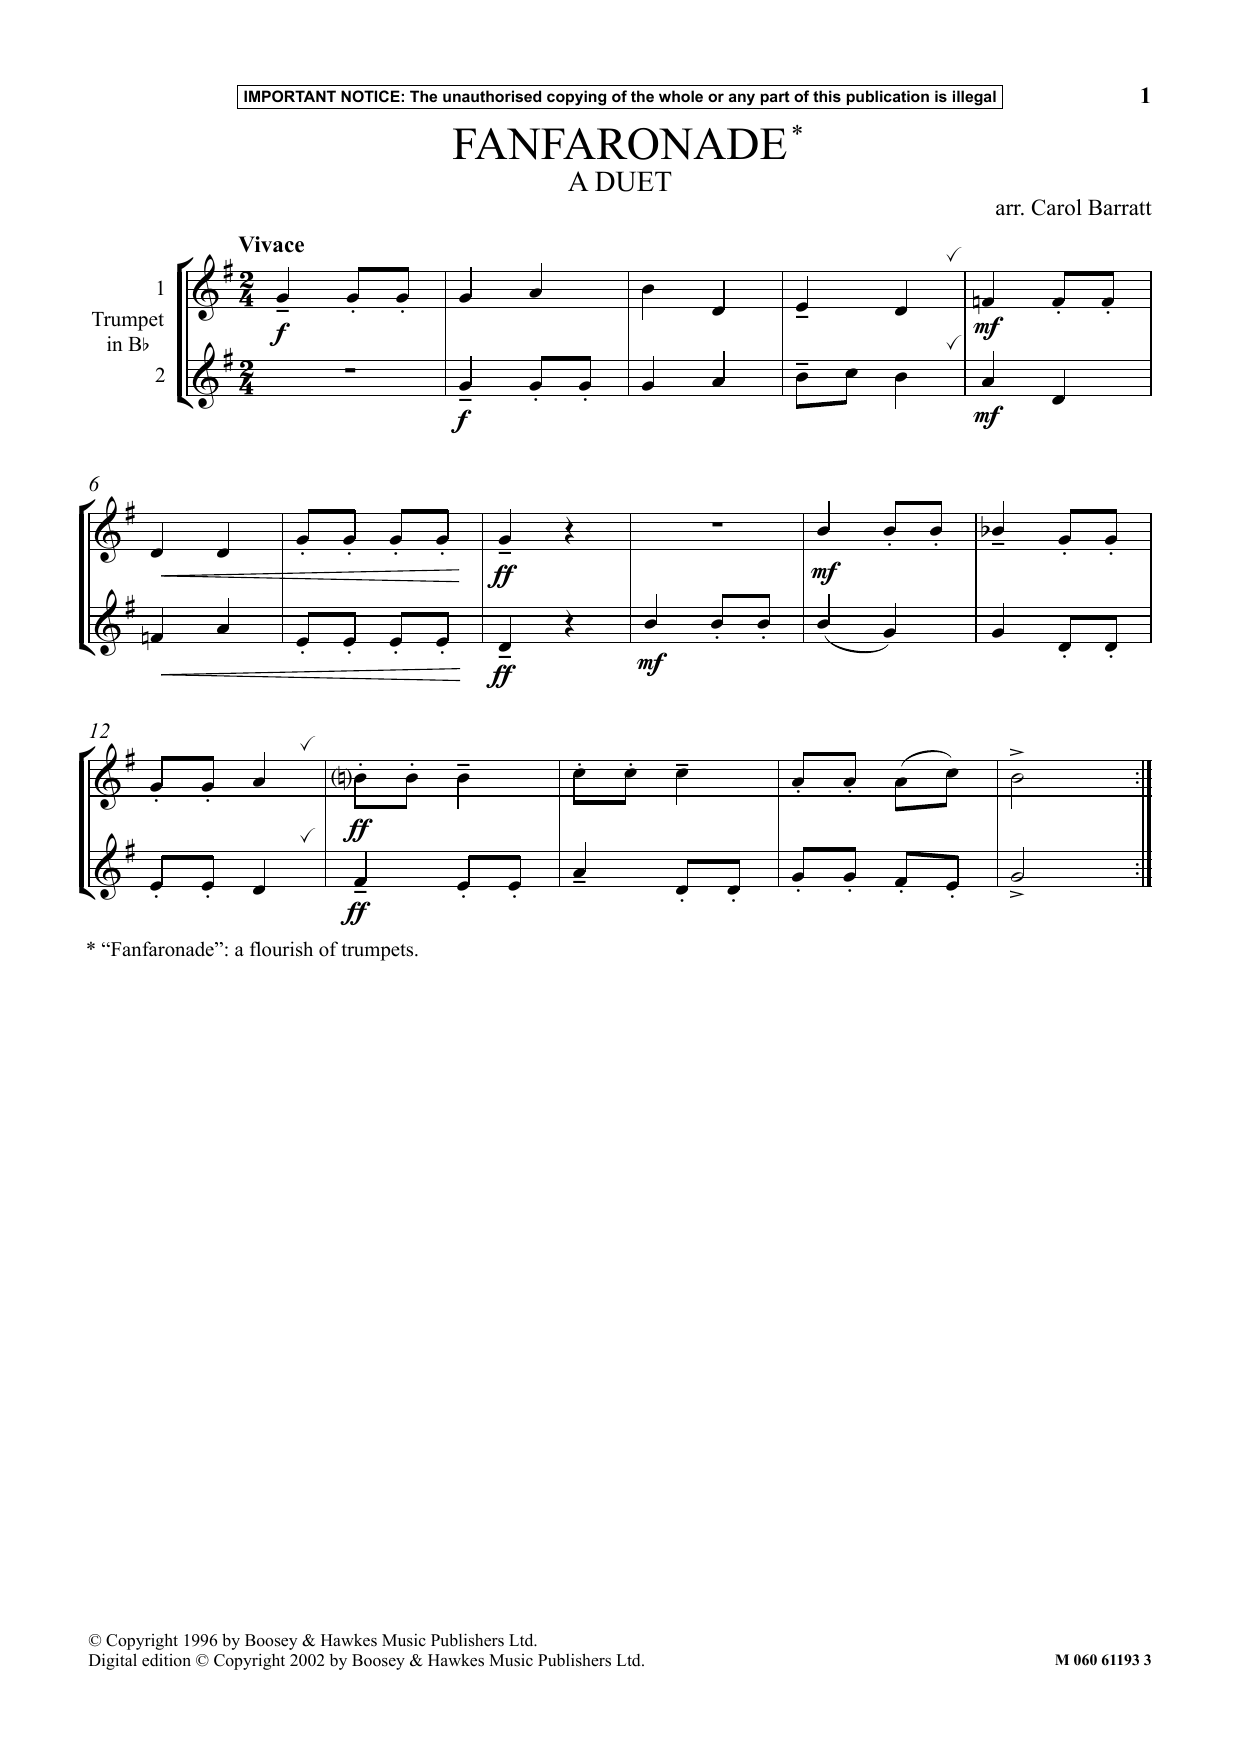 Carol Barratt Fanfaronade Sheet Music Notes & Chords for Instrumental Solo - Download or Print PDF